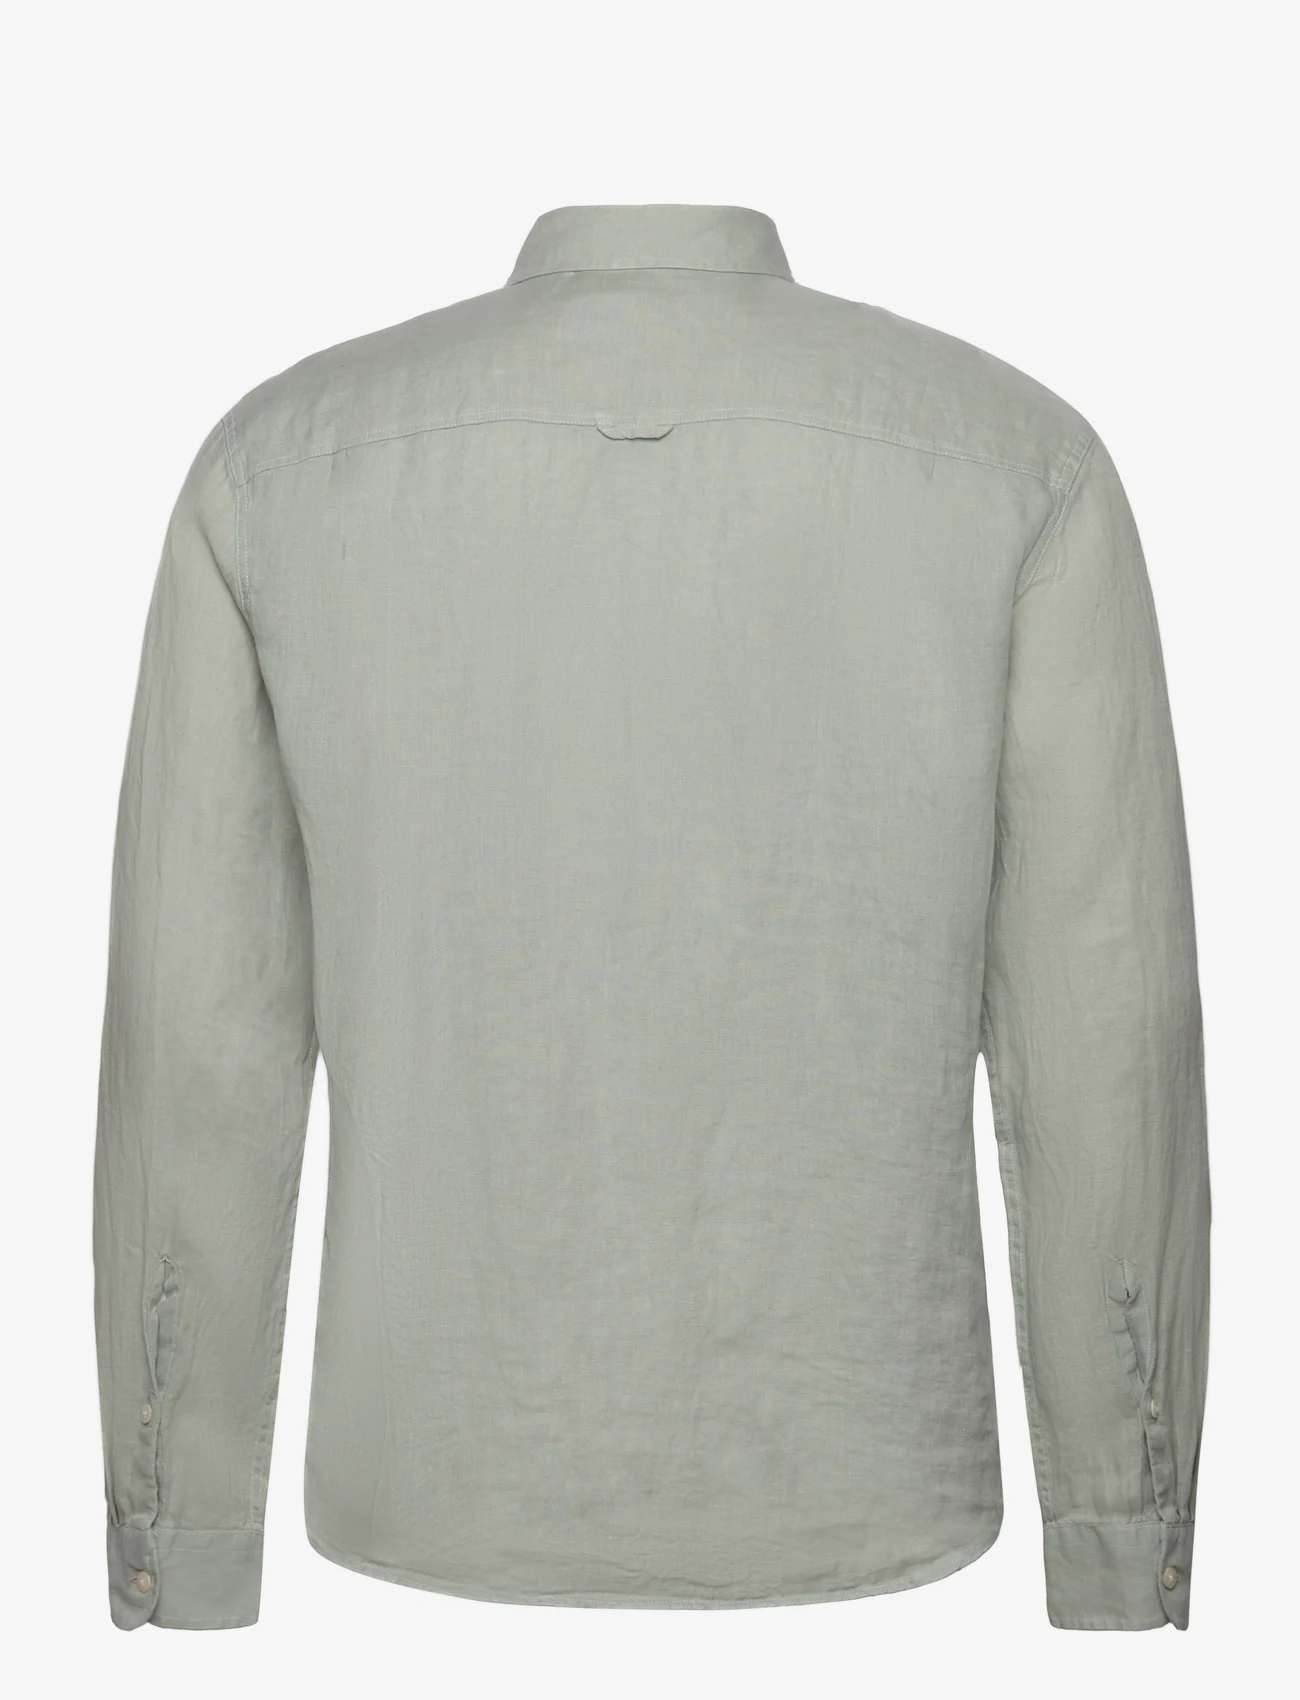 Lexington Clothing - Ryan Linen Shirt - linskjorter - green - 1